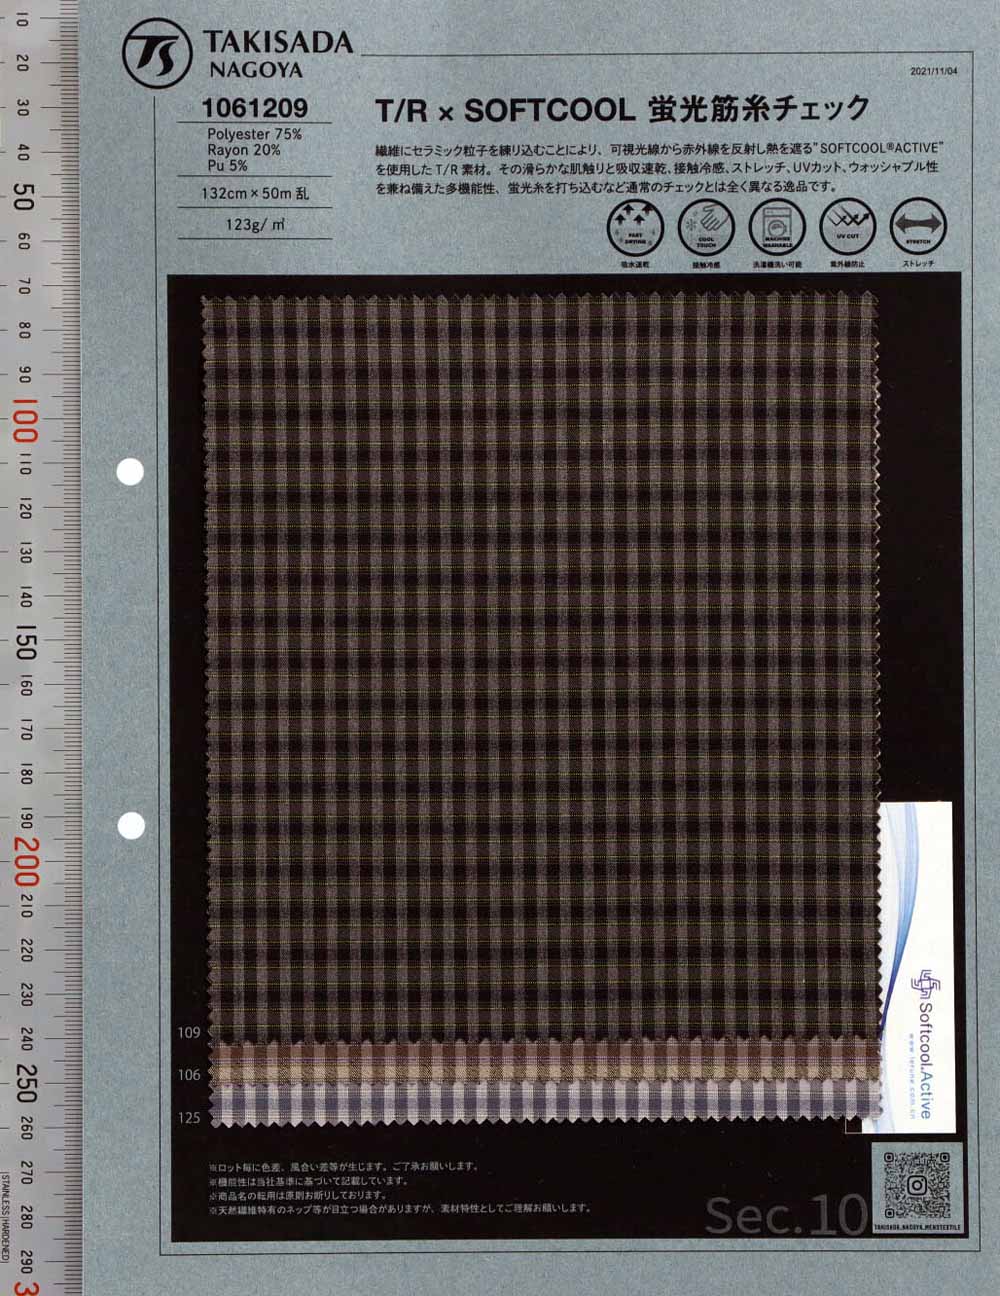 1061209 T / R × SOFTCOOL Fluoreszierende Fadenprüfung[Textilgewebe] Takisada Nagoya